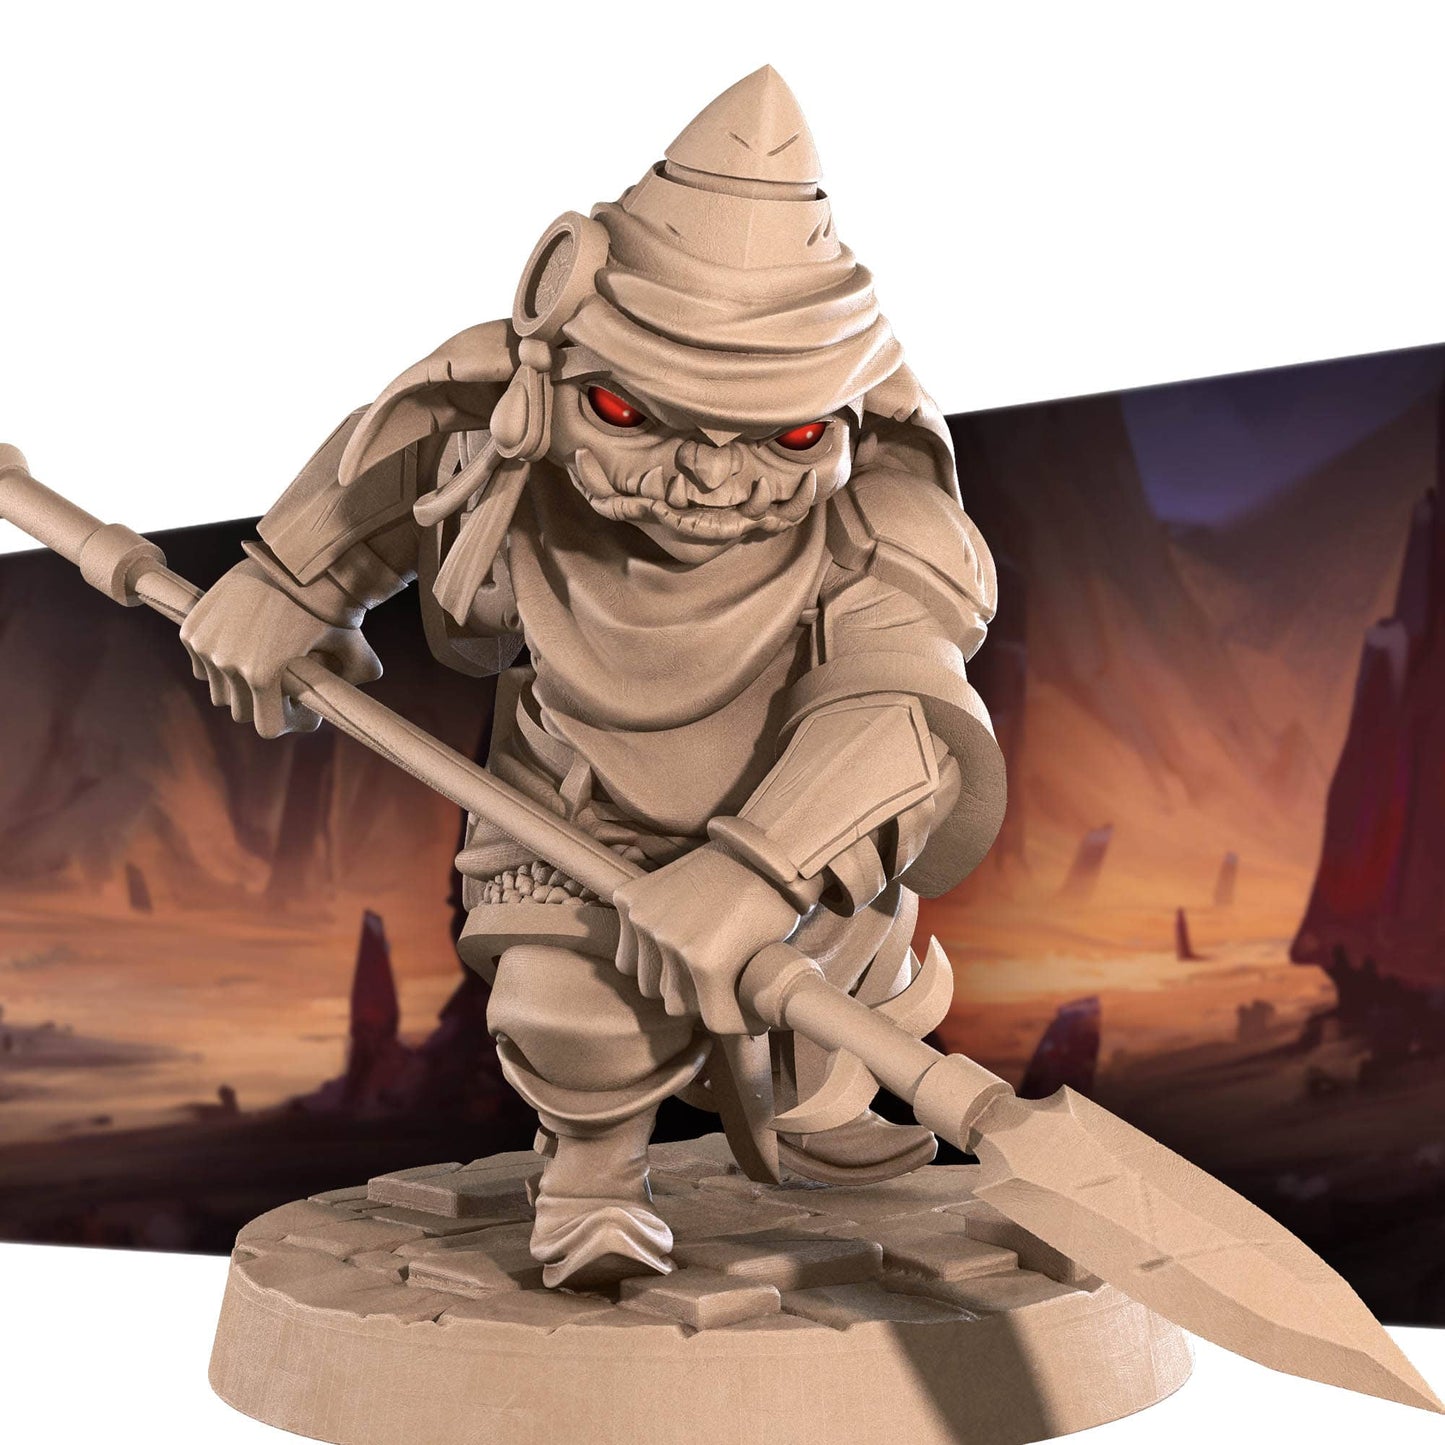 Goblin Warrior | D&D Miniature TTRPG Character | Bite the Bullet - Tattles Told 3D